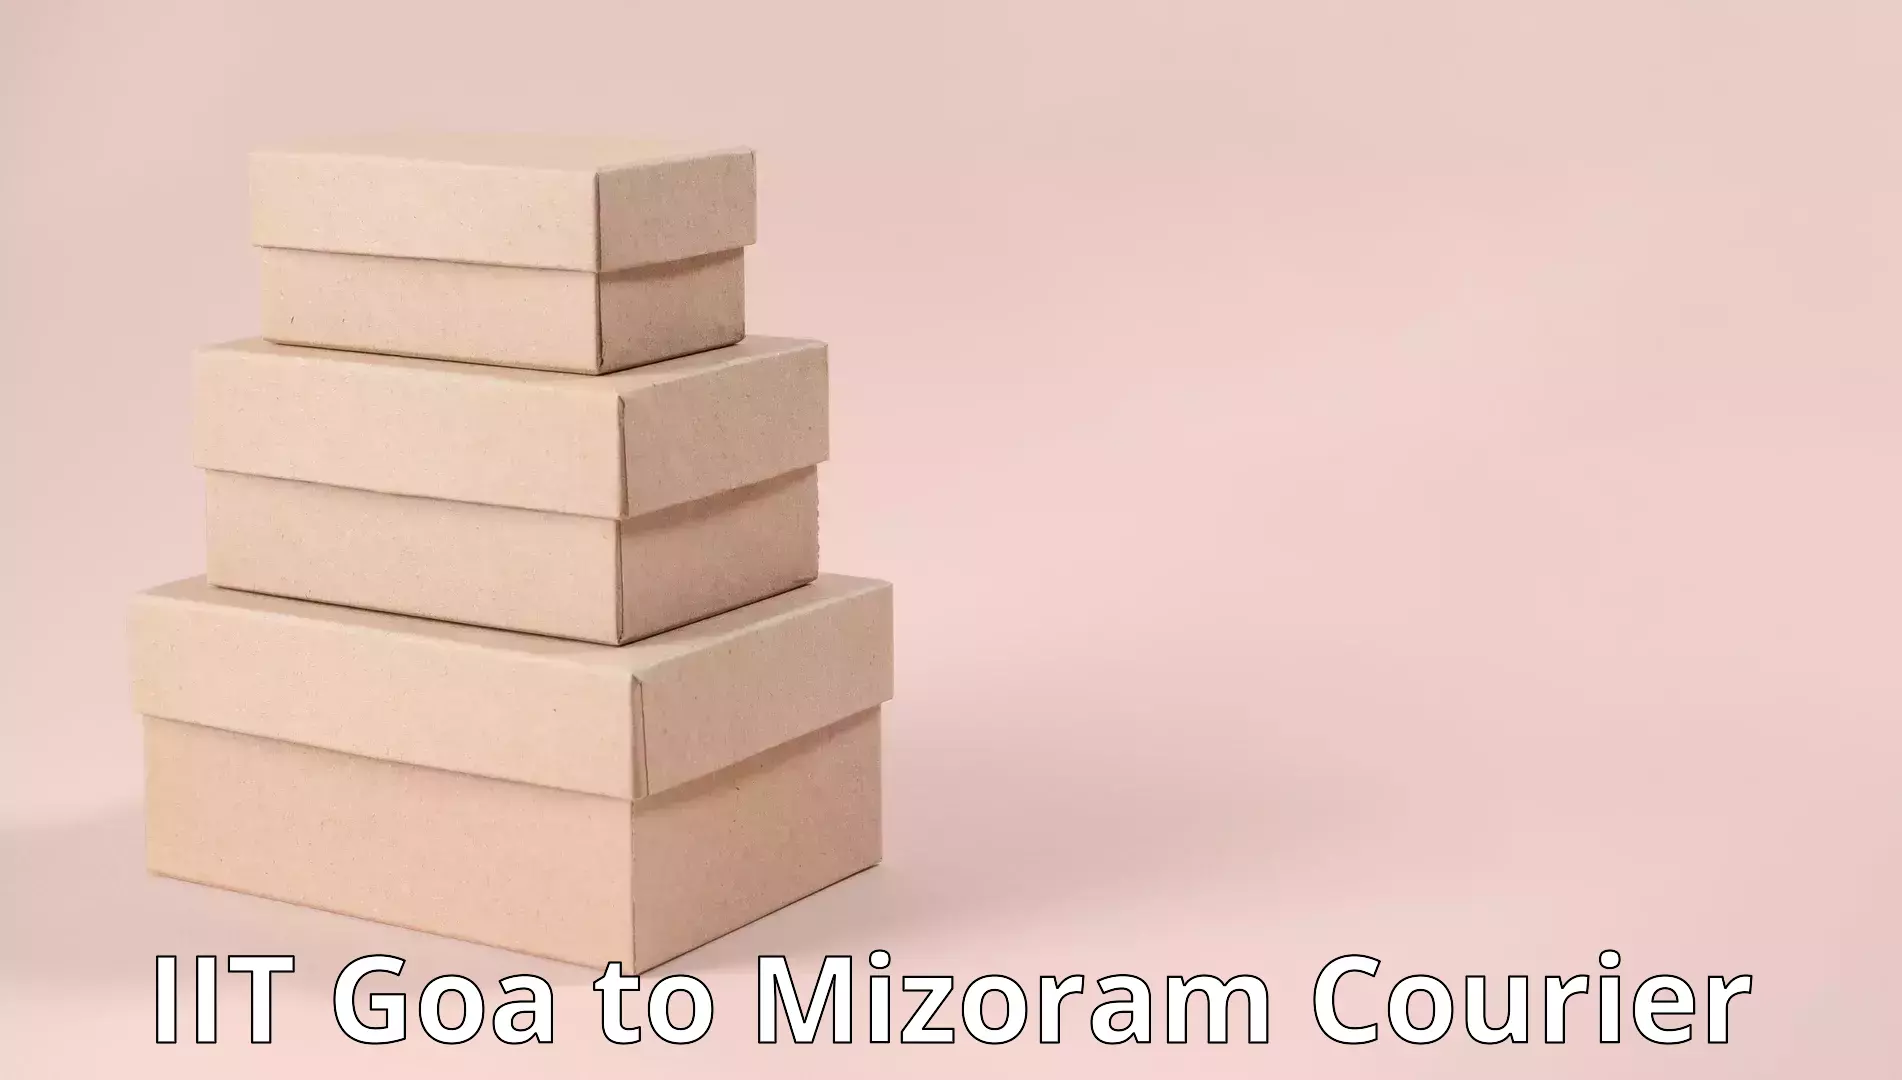 Budget-friendly movers IIT Goa to Mizoram